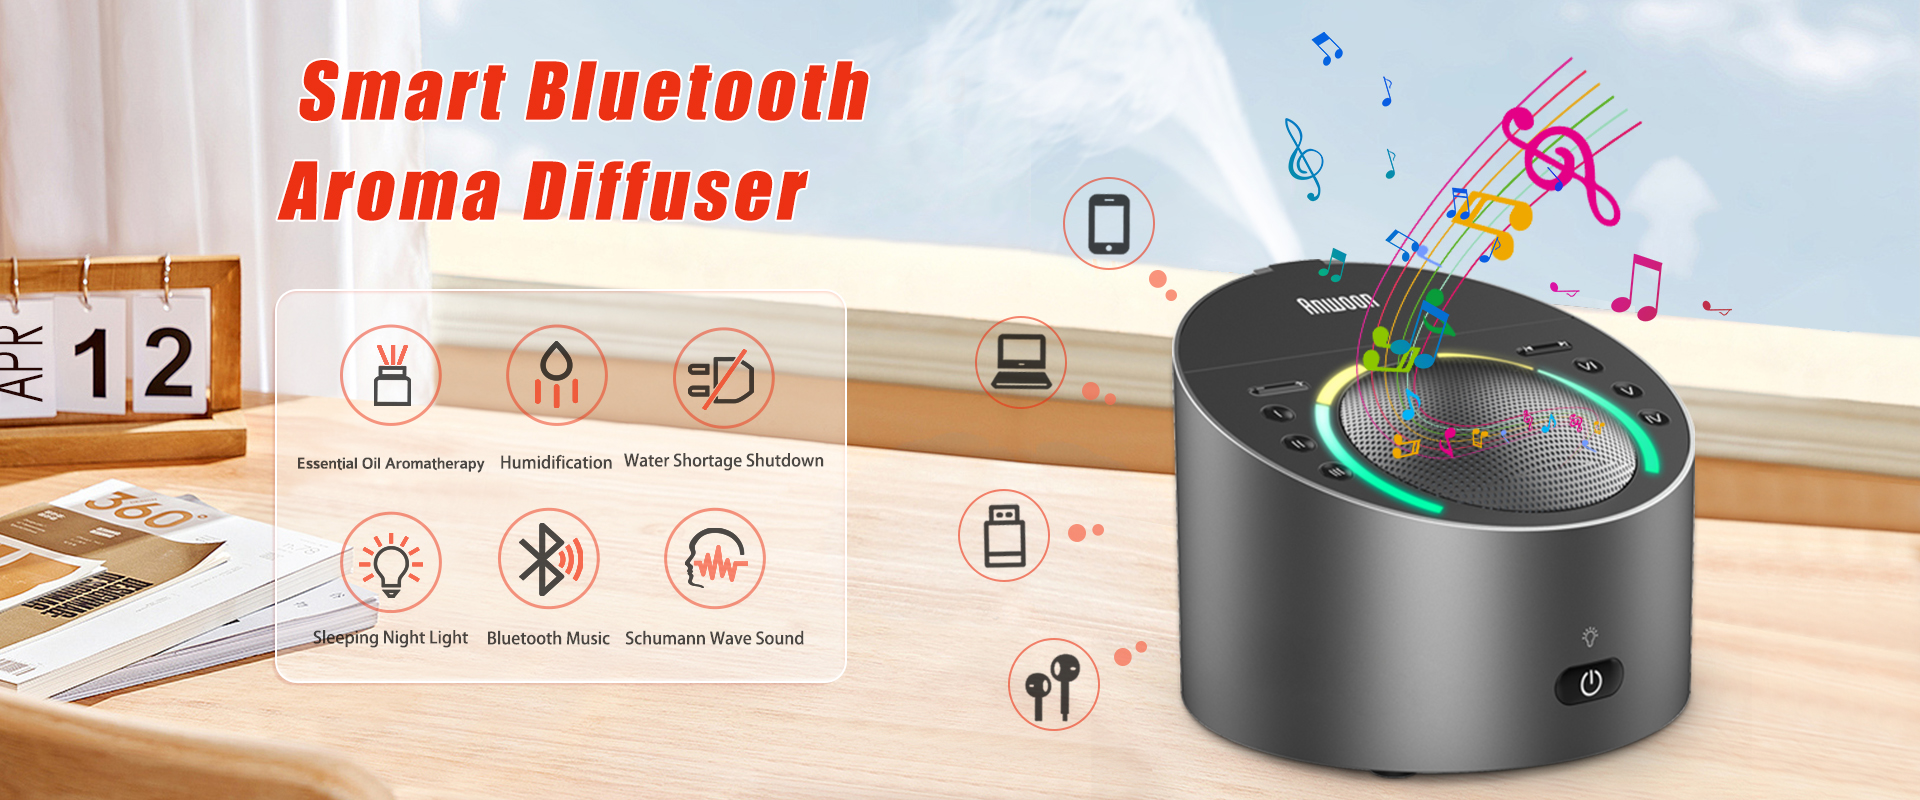 Smart Bluetooth Aroma Diffuser